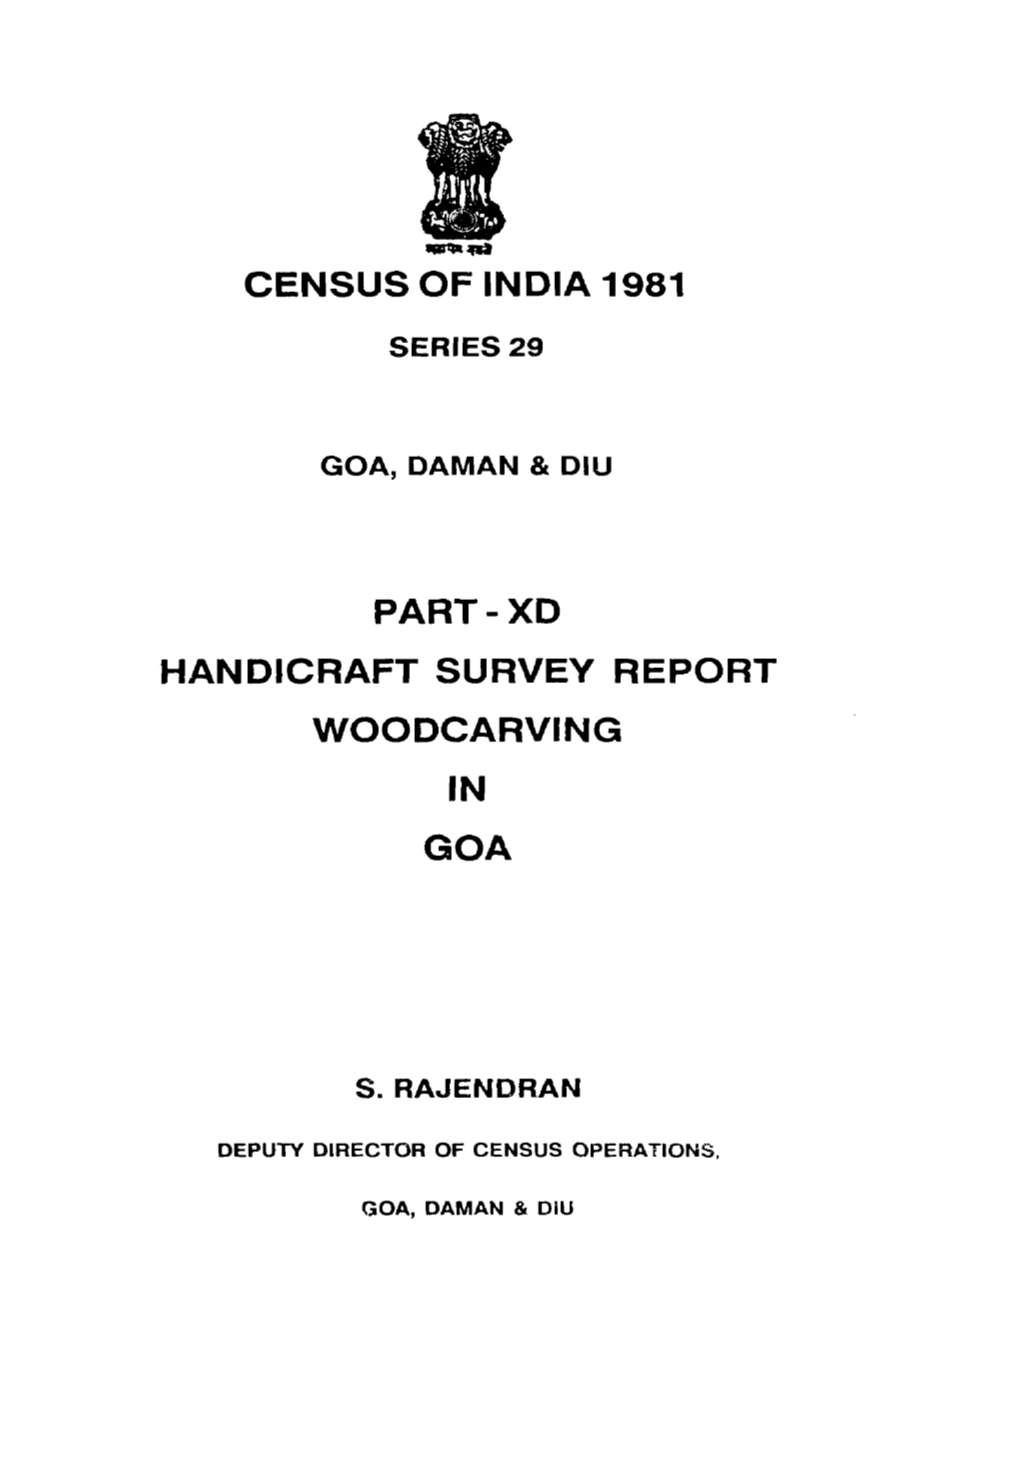 Part-Xd Handicraft Survey Report Woodcarving in Goa